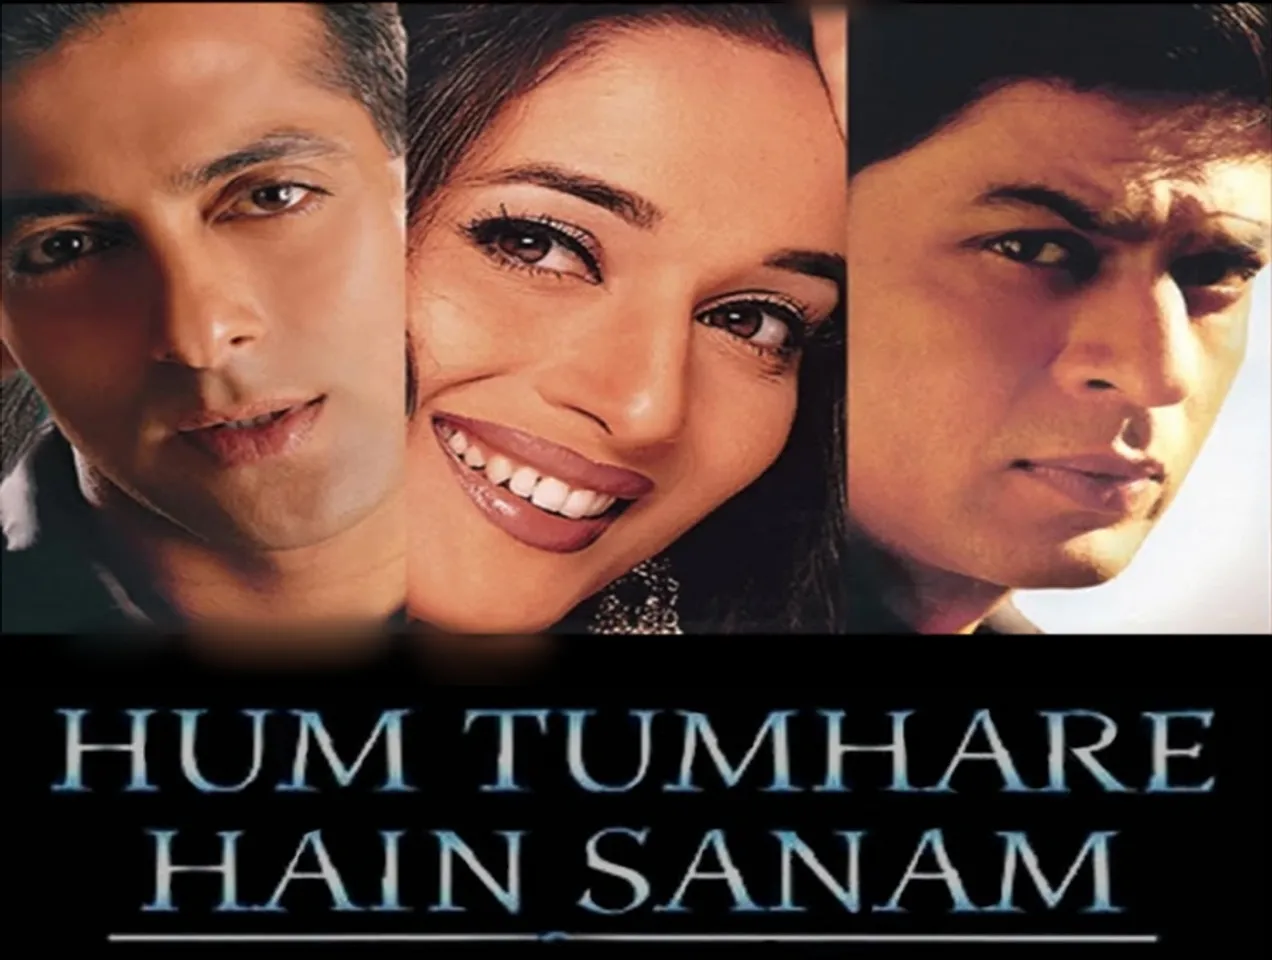 20 Years Of Hum Tumhare Hain Sanam - When Shah Rukh Khan, Salman Khan, Madhuri Dixit And Aishwarya Rai Came Together